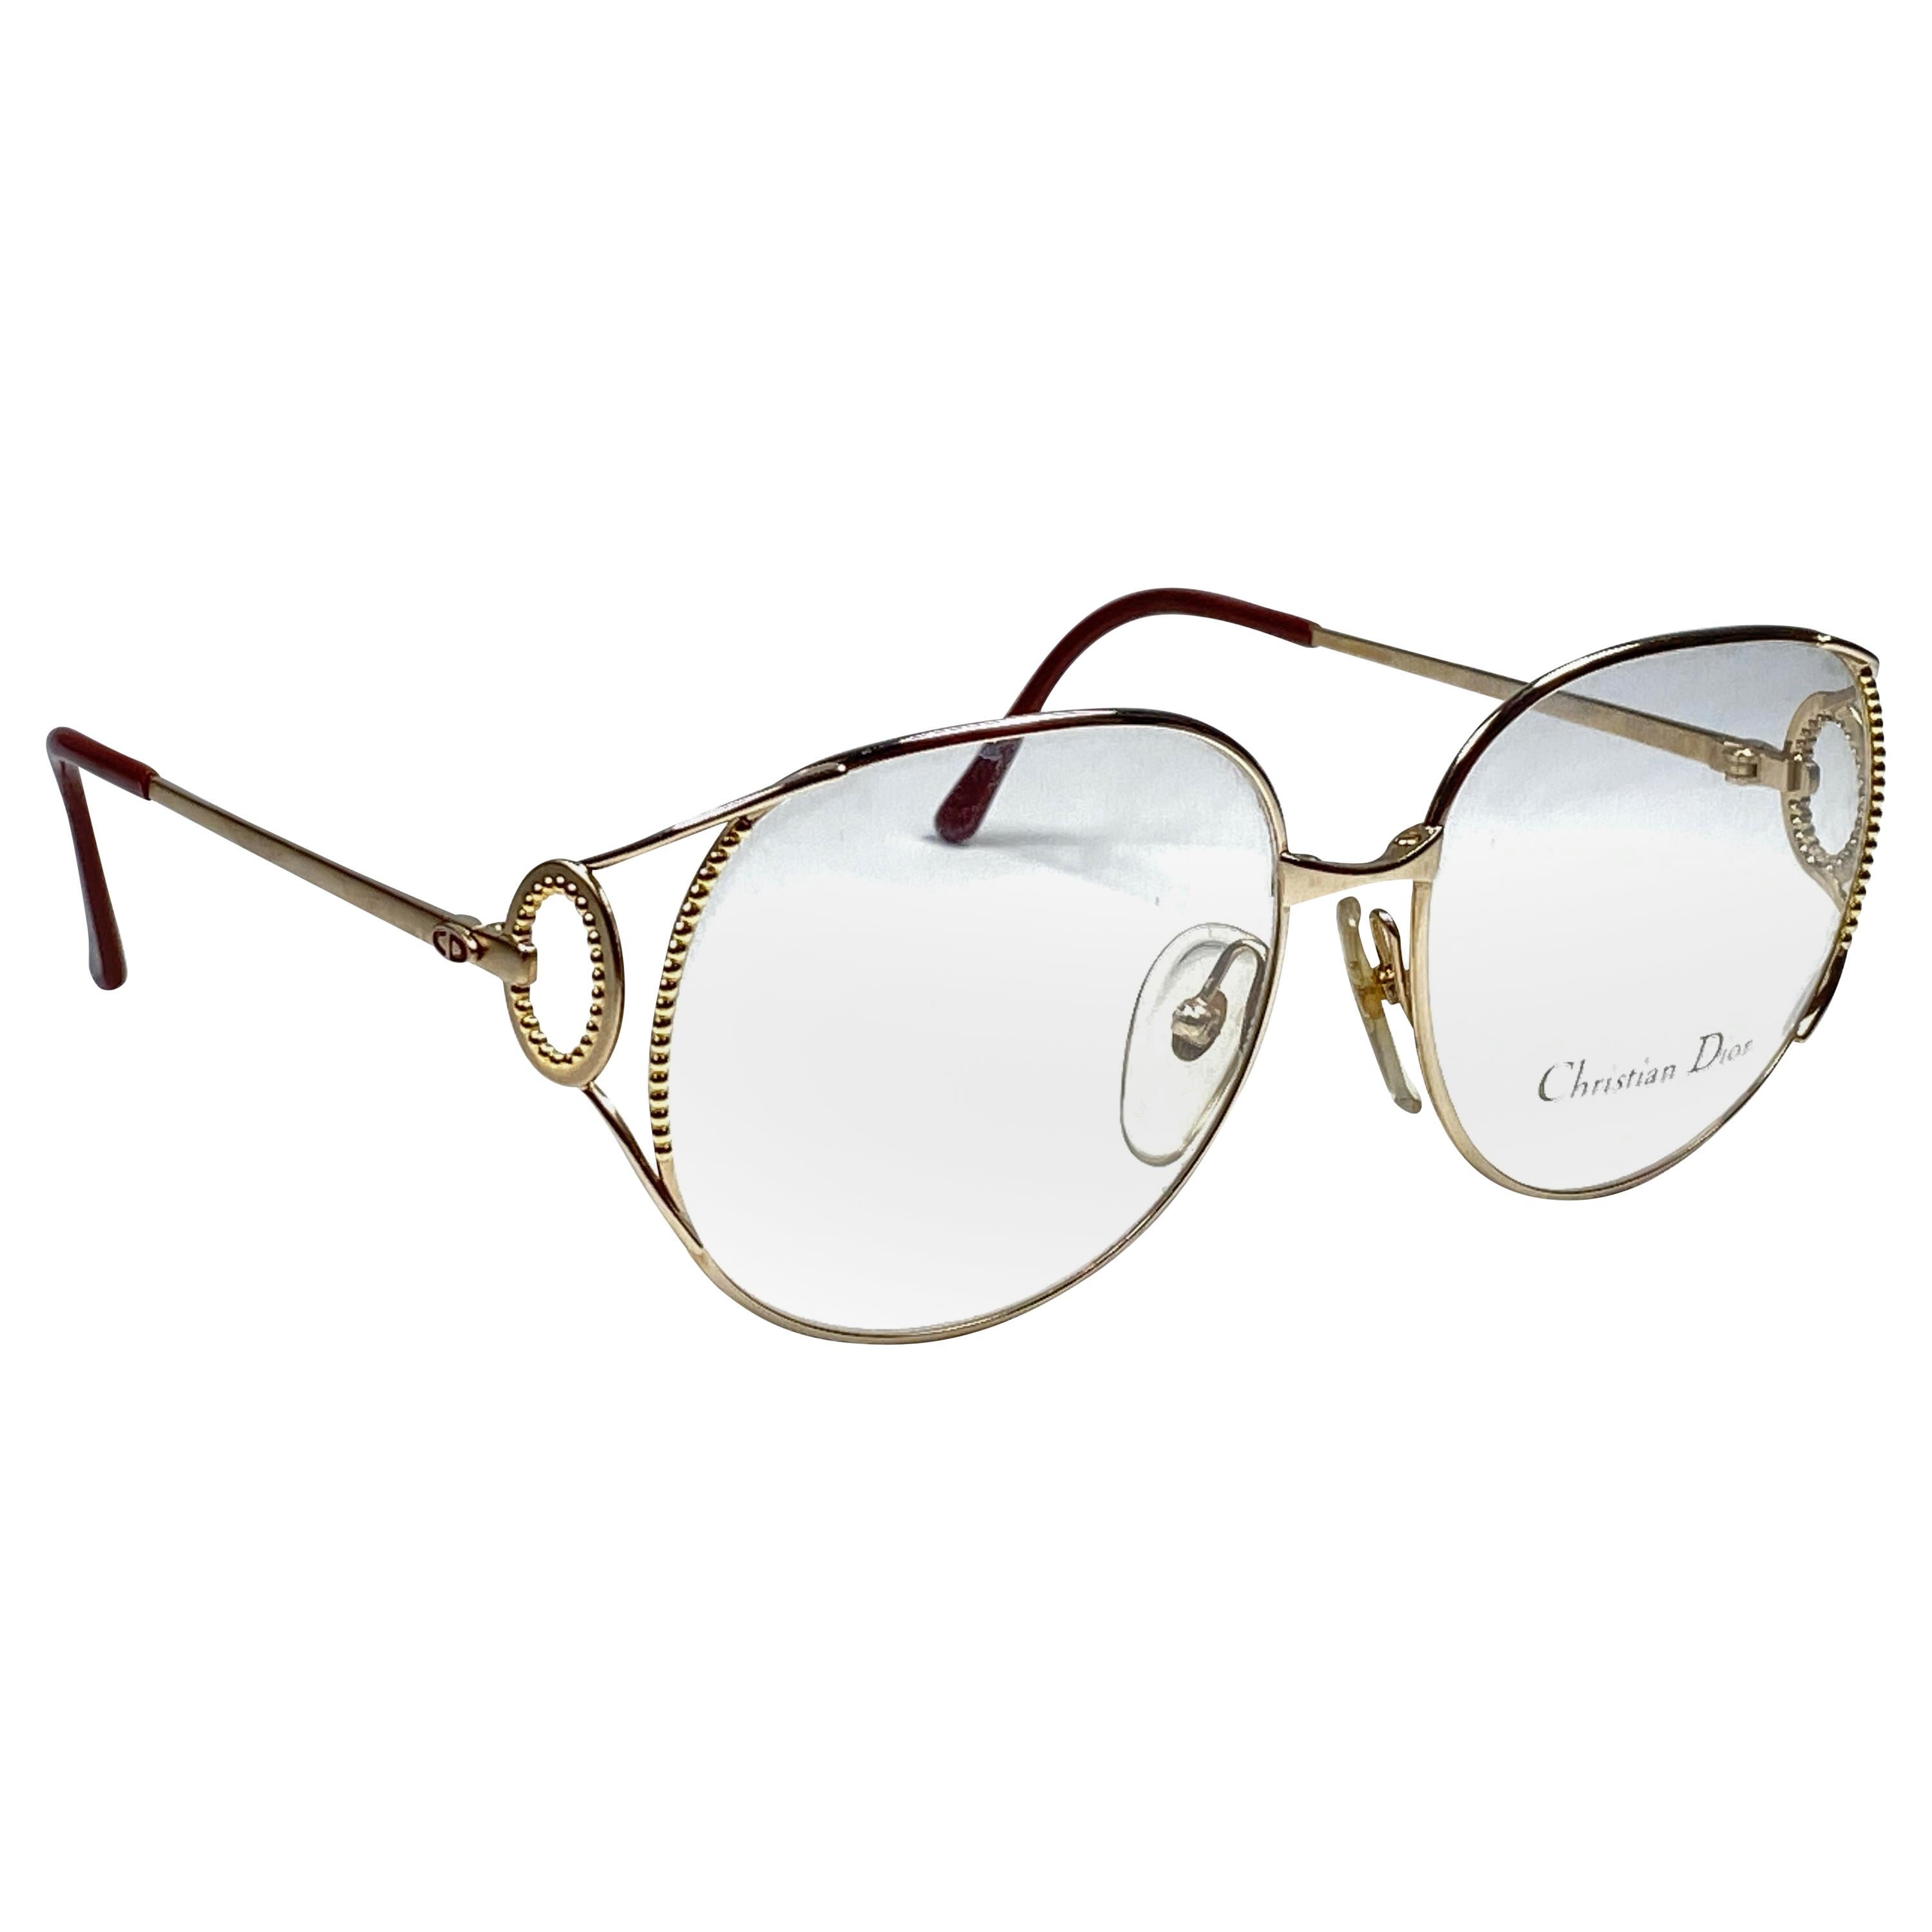 New Vintage Christian Dior 2788 Prescription Gold Reading Glasses